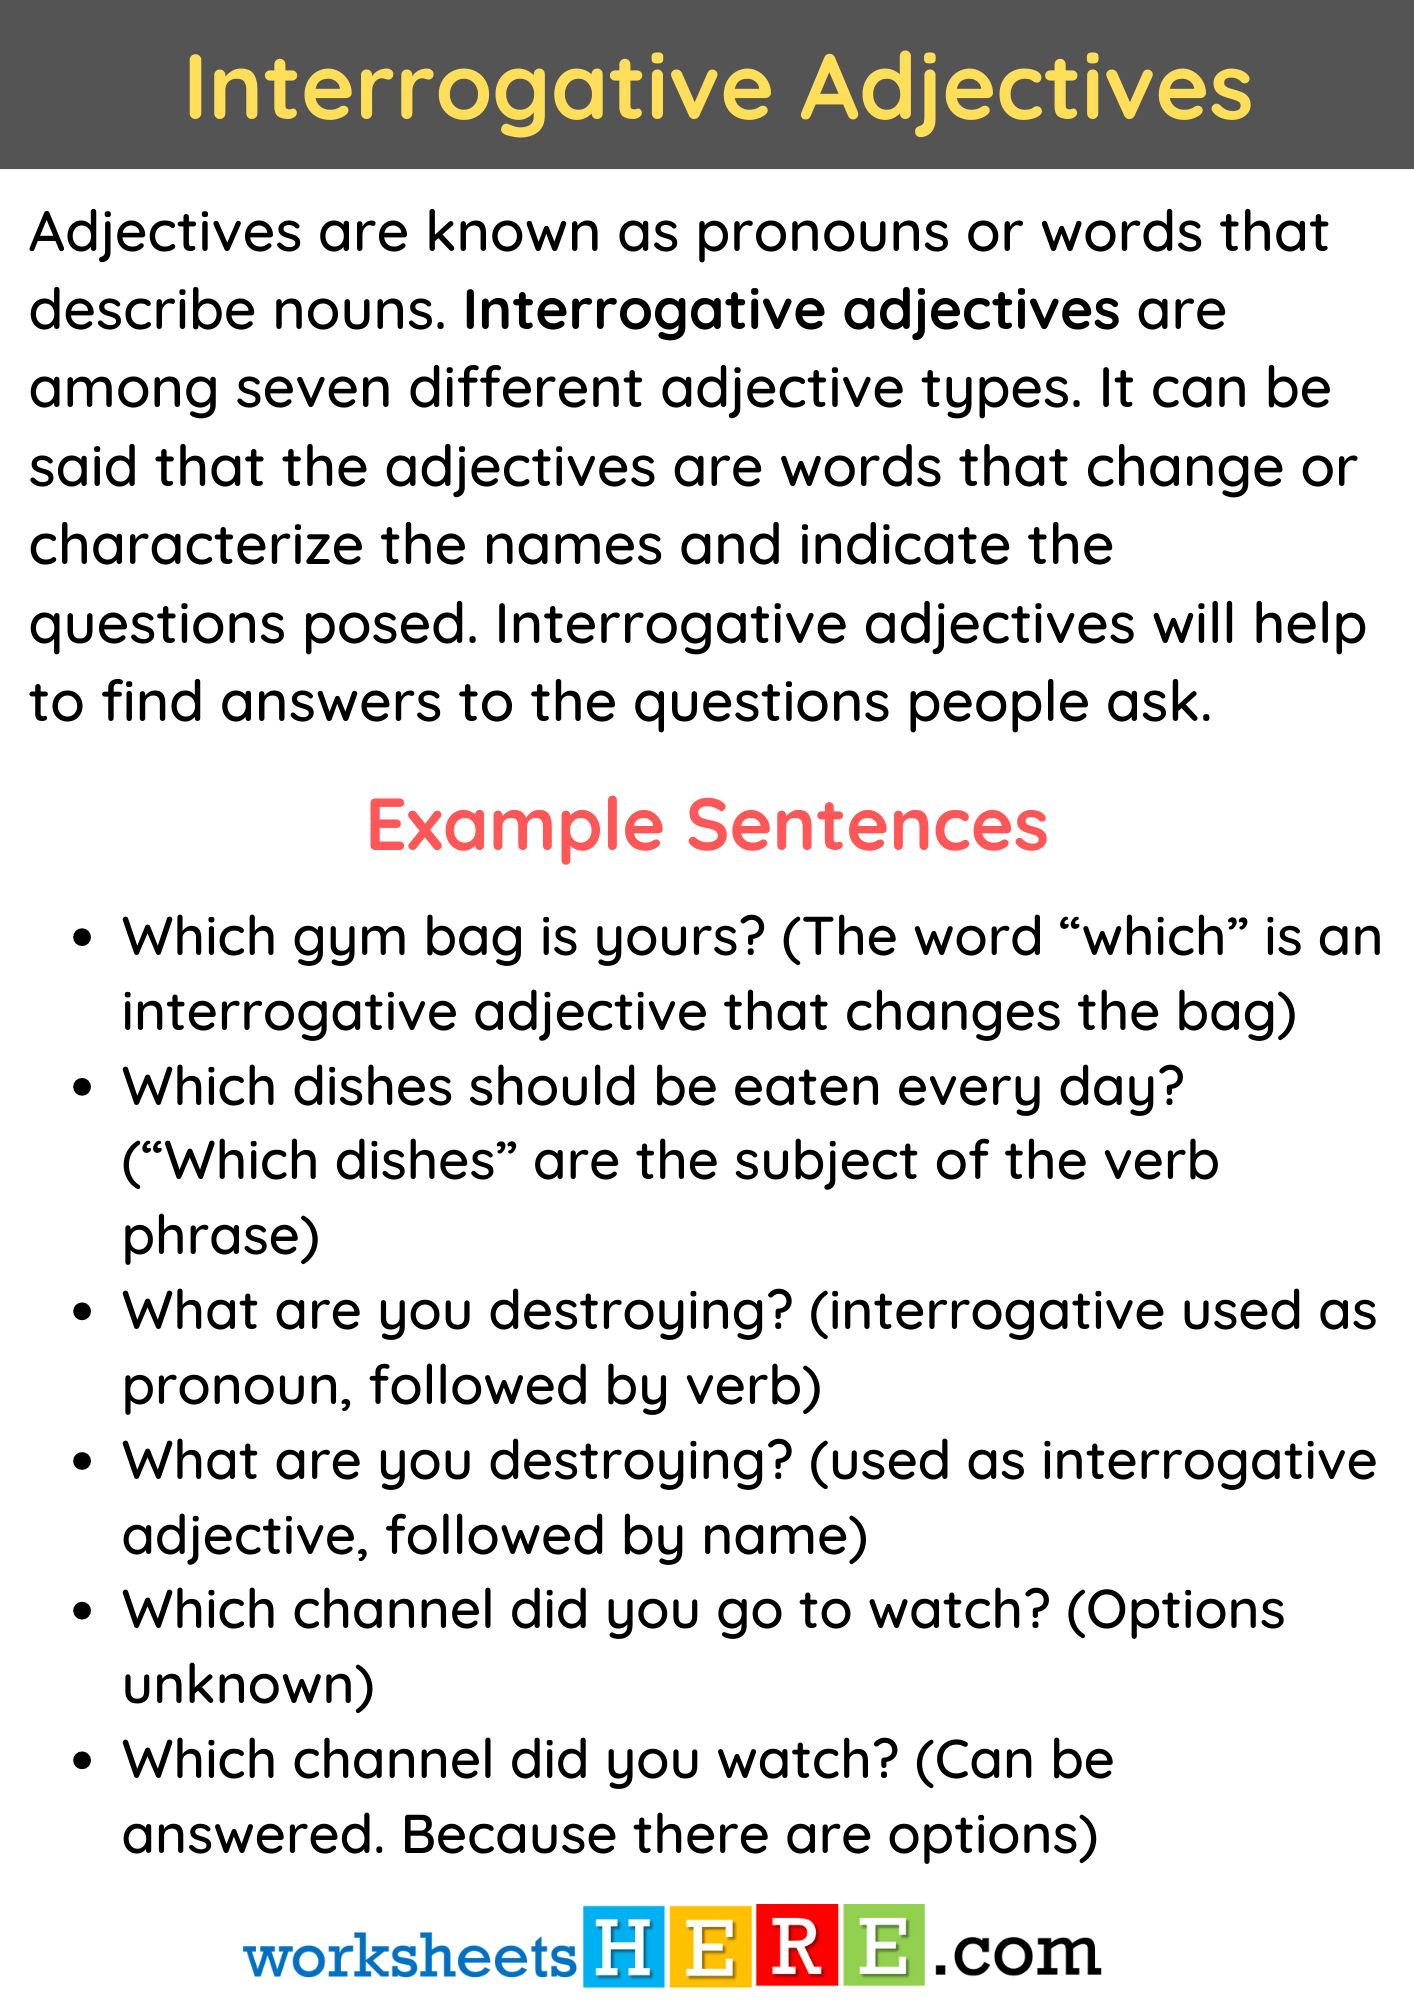 Interrogative Adjectives Definition and Example Sentences PDF Worksheet